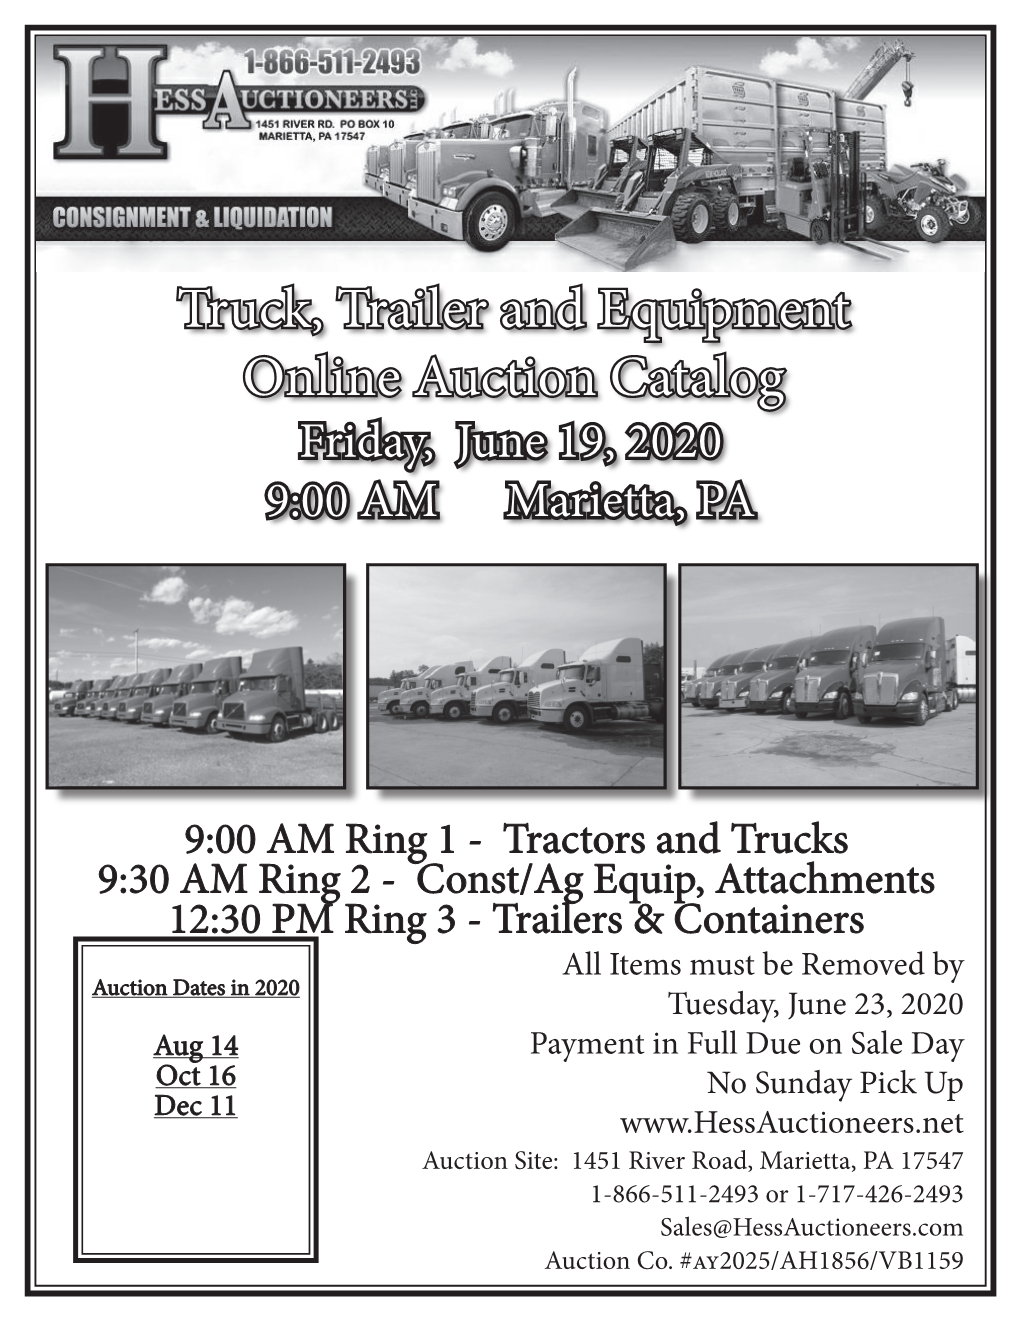 Truck, Trailer and Equipment Online Auction Catalog Friday, June 19, 2020 9:00 AM Marietta, PA